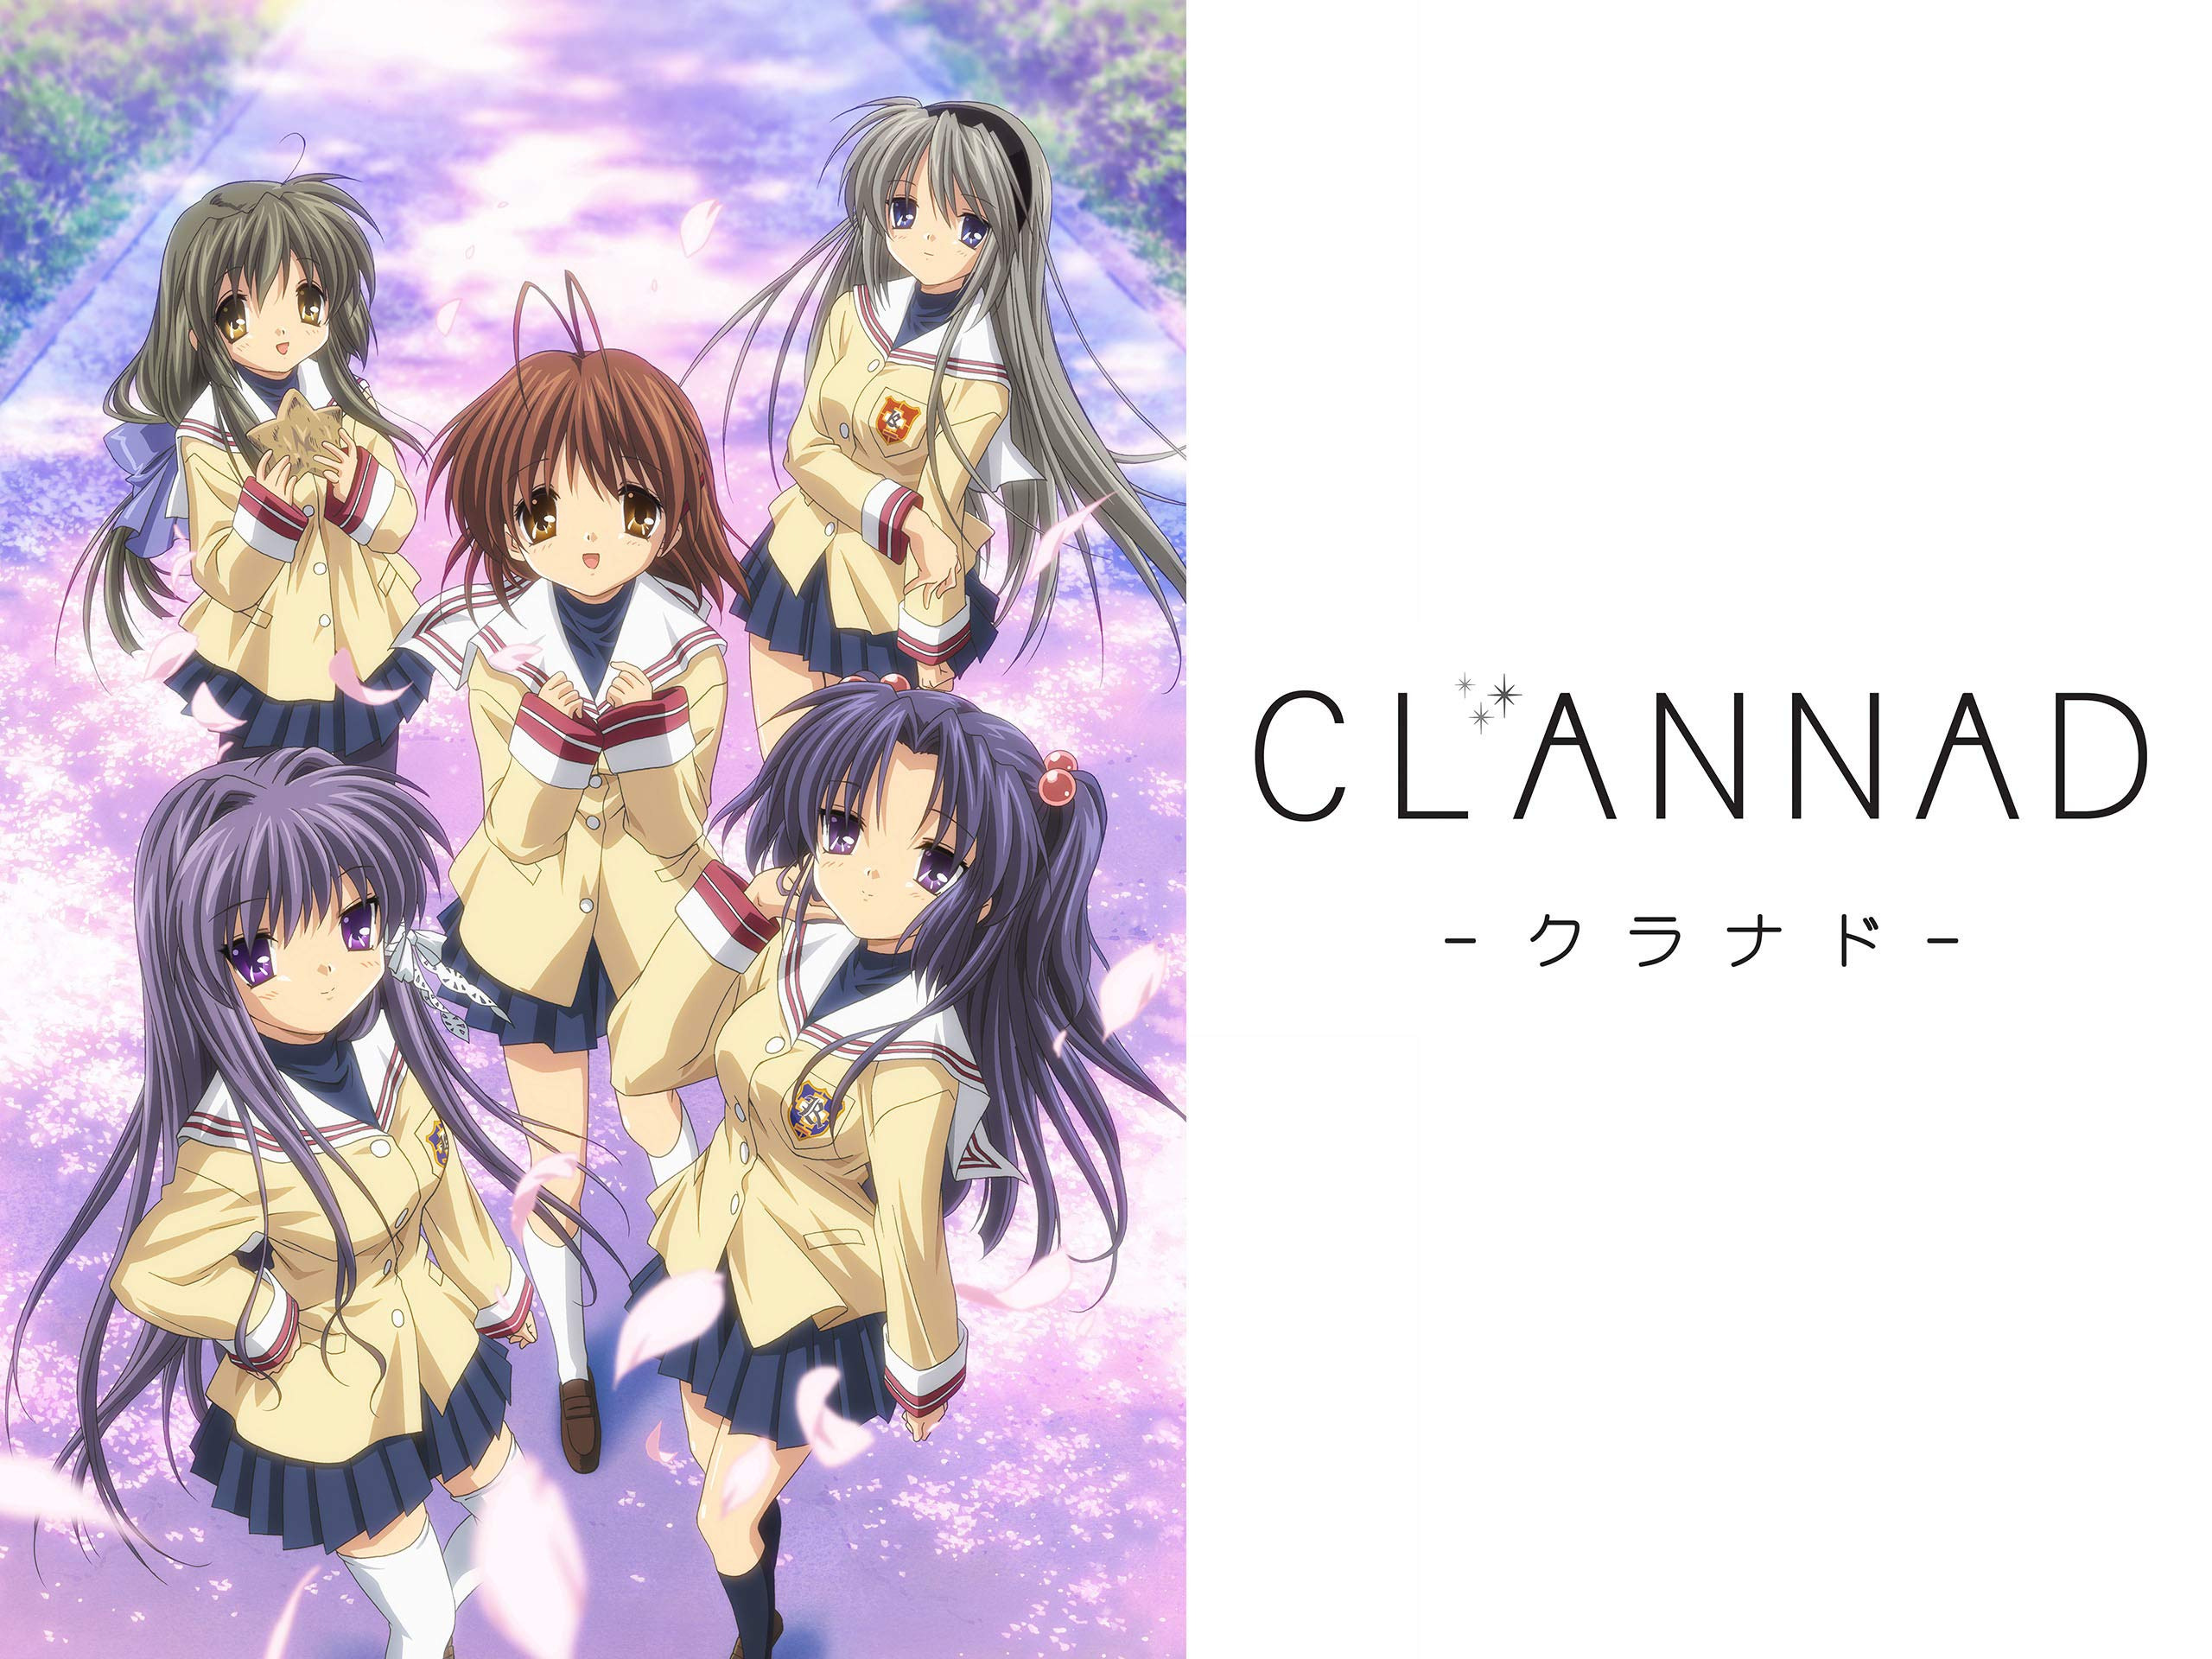 CLANNAD (Visual Novel) - TV Tropes